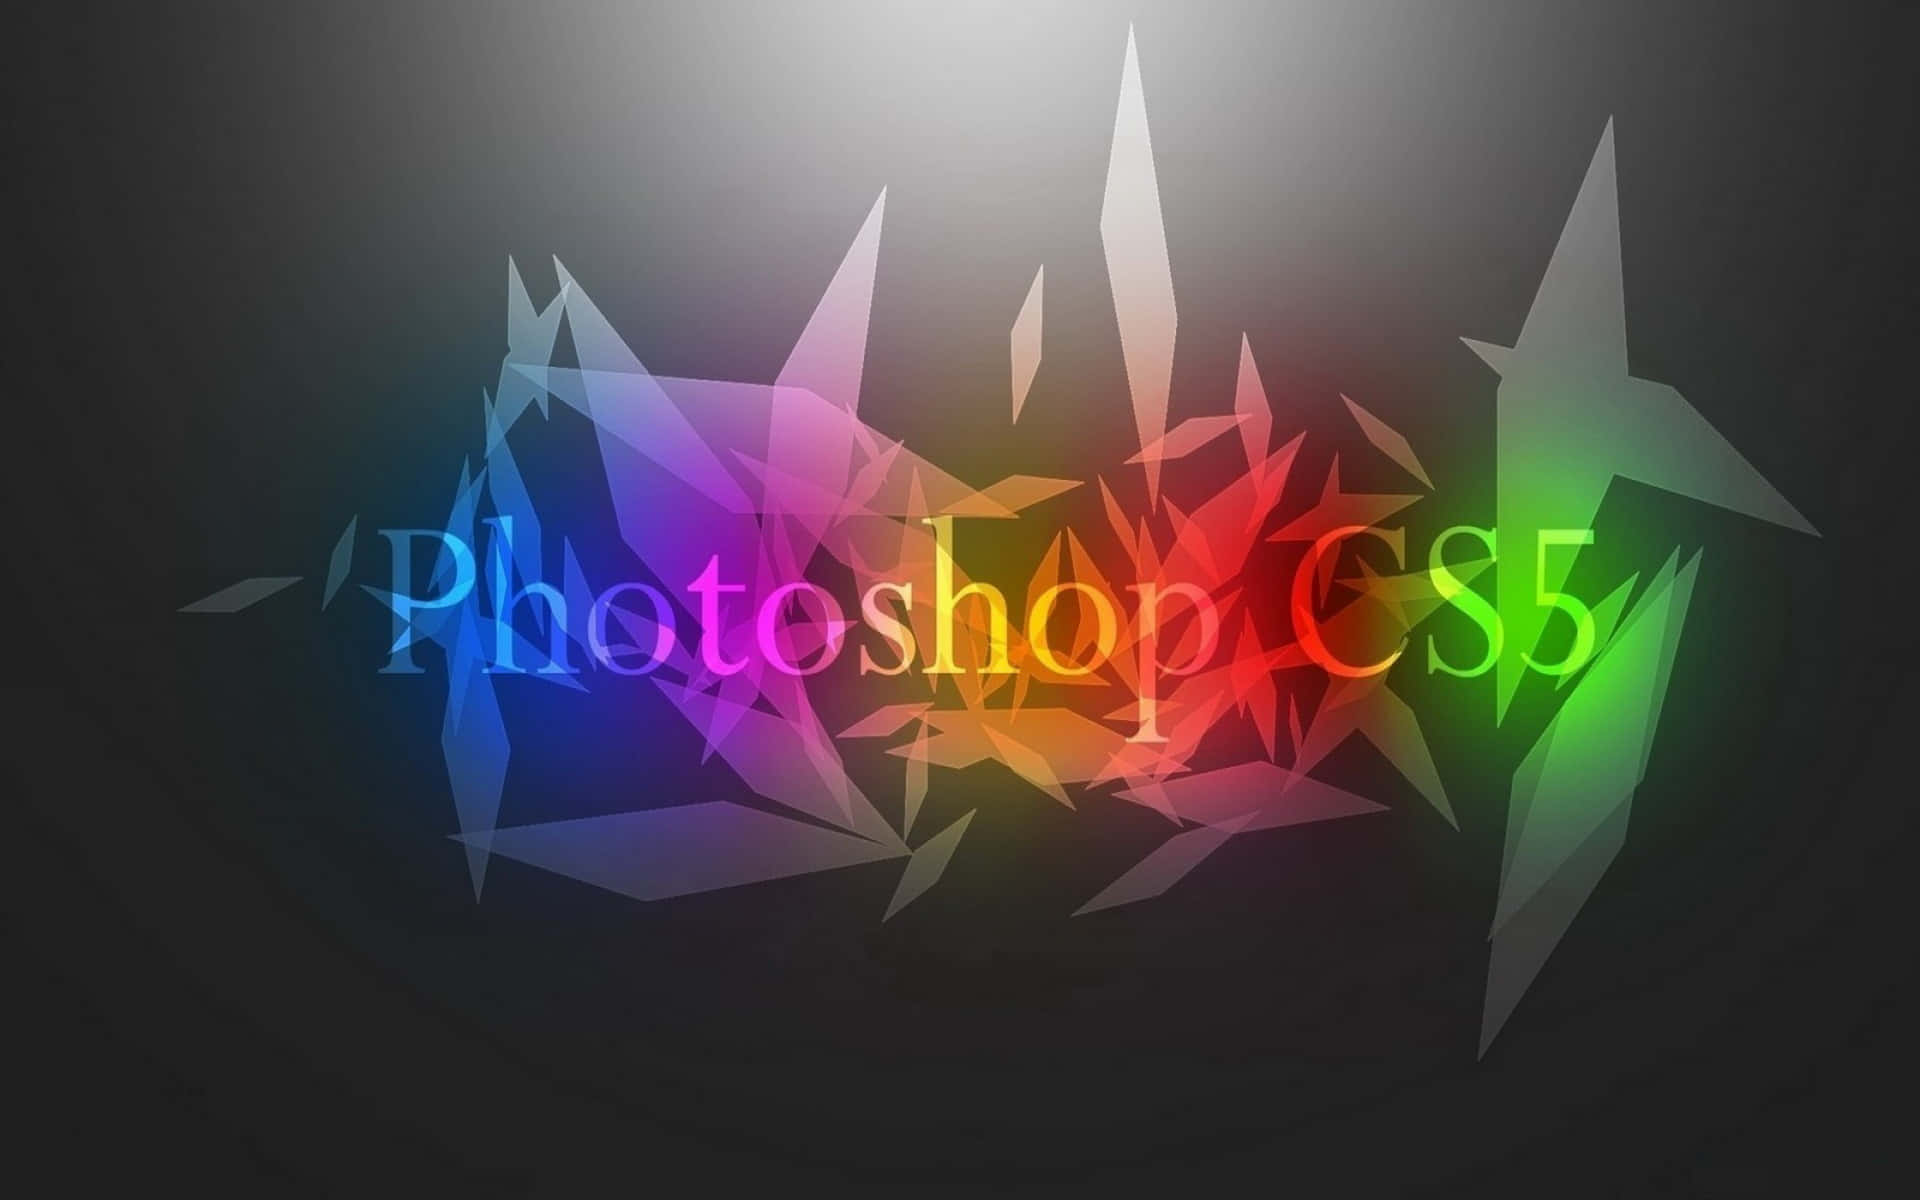 Sfondovivace Per Adobe Photoshop Cs5